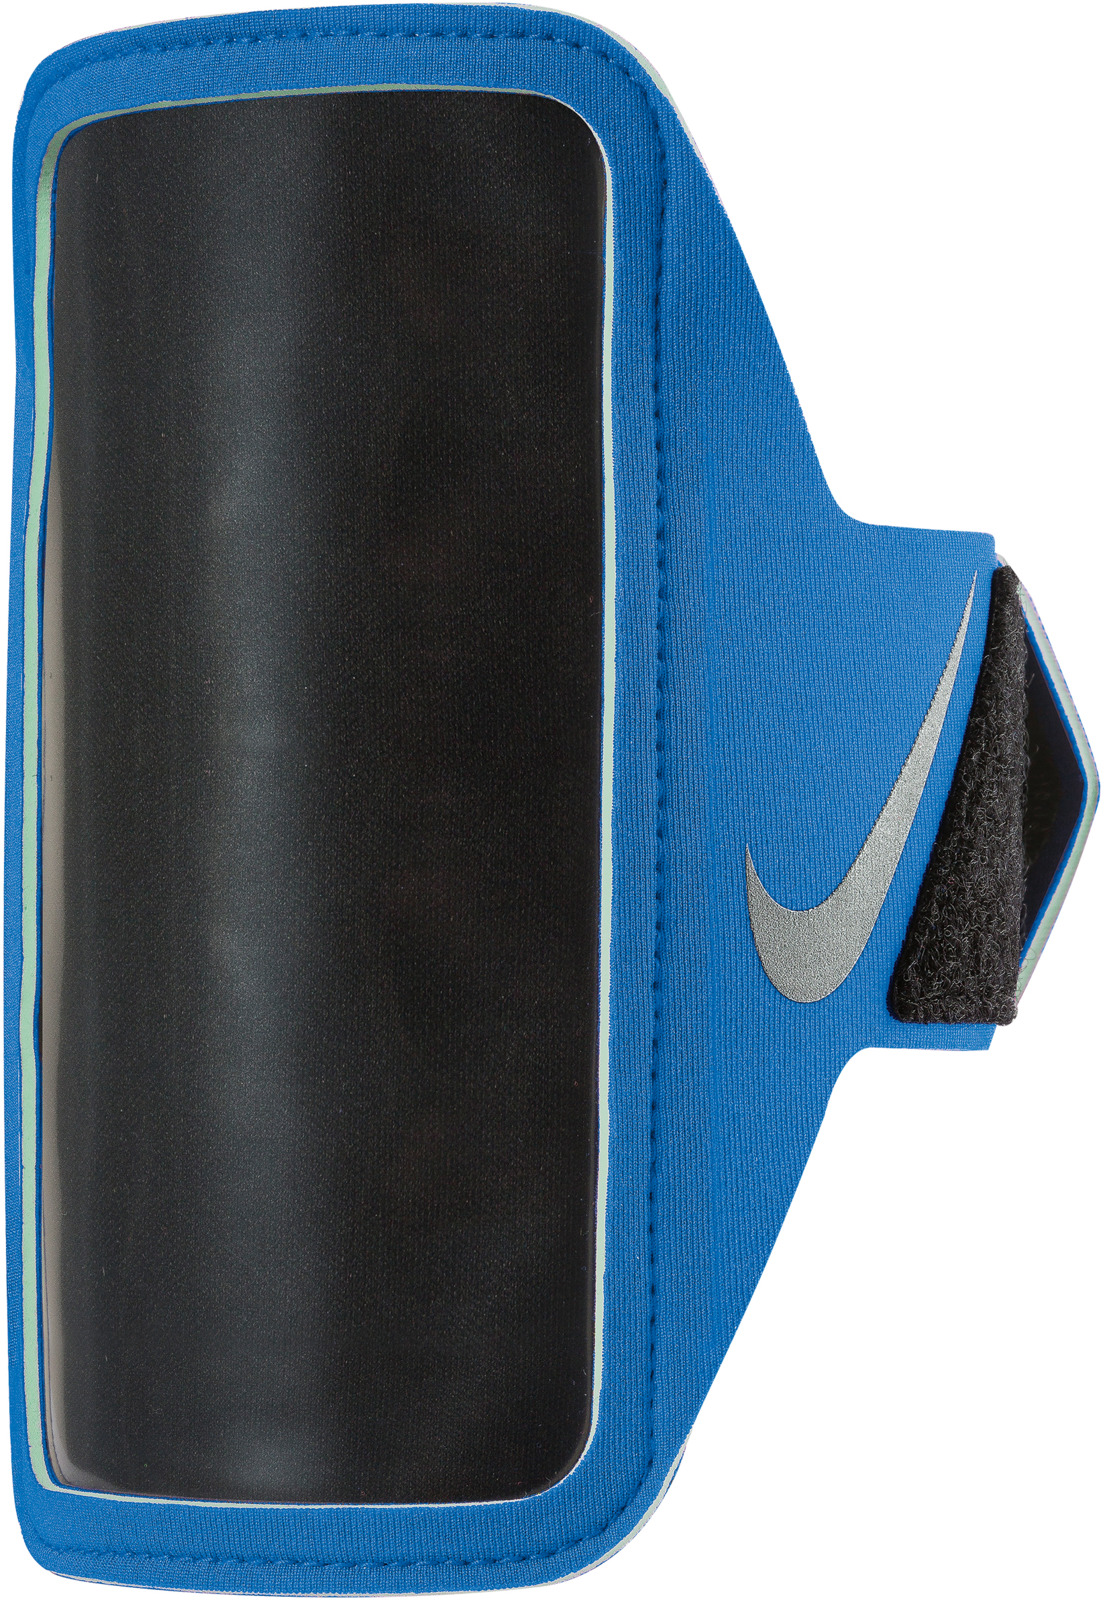 Чехол для телефона на руку Nike, цвет: синий, серебряный